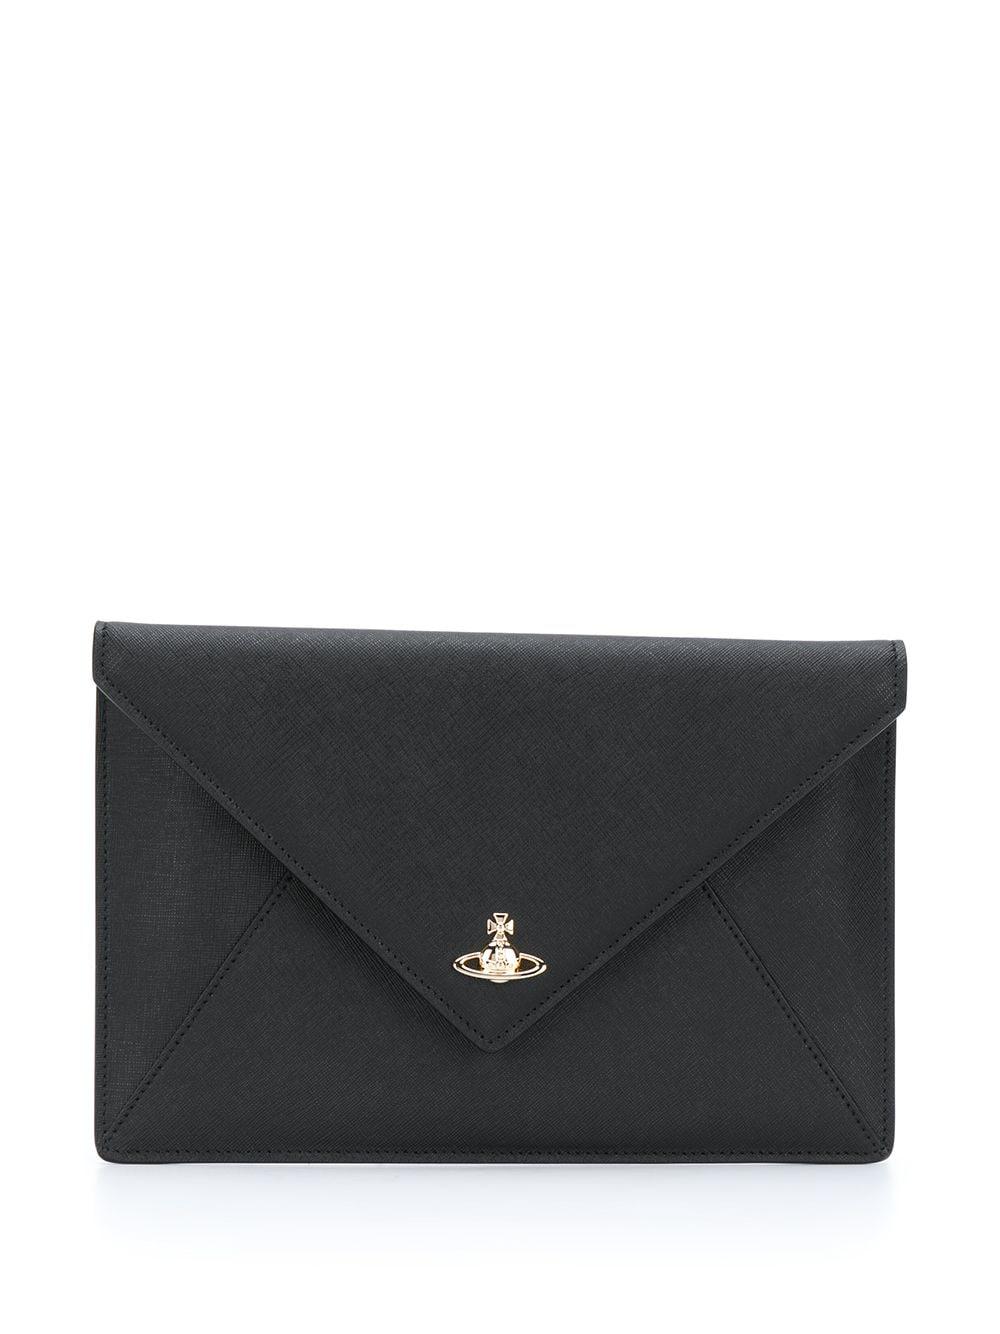 Vivienne Westwood Victoria Leather Envelope Clutch in Black | Lyst